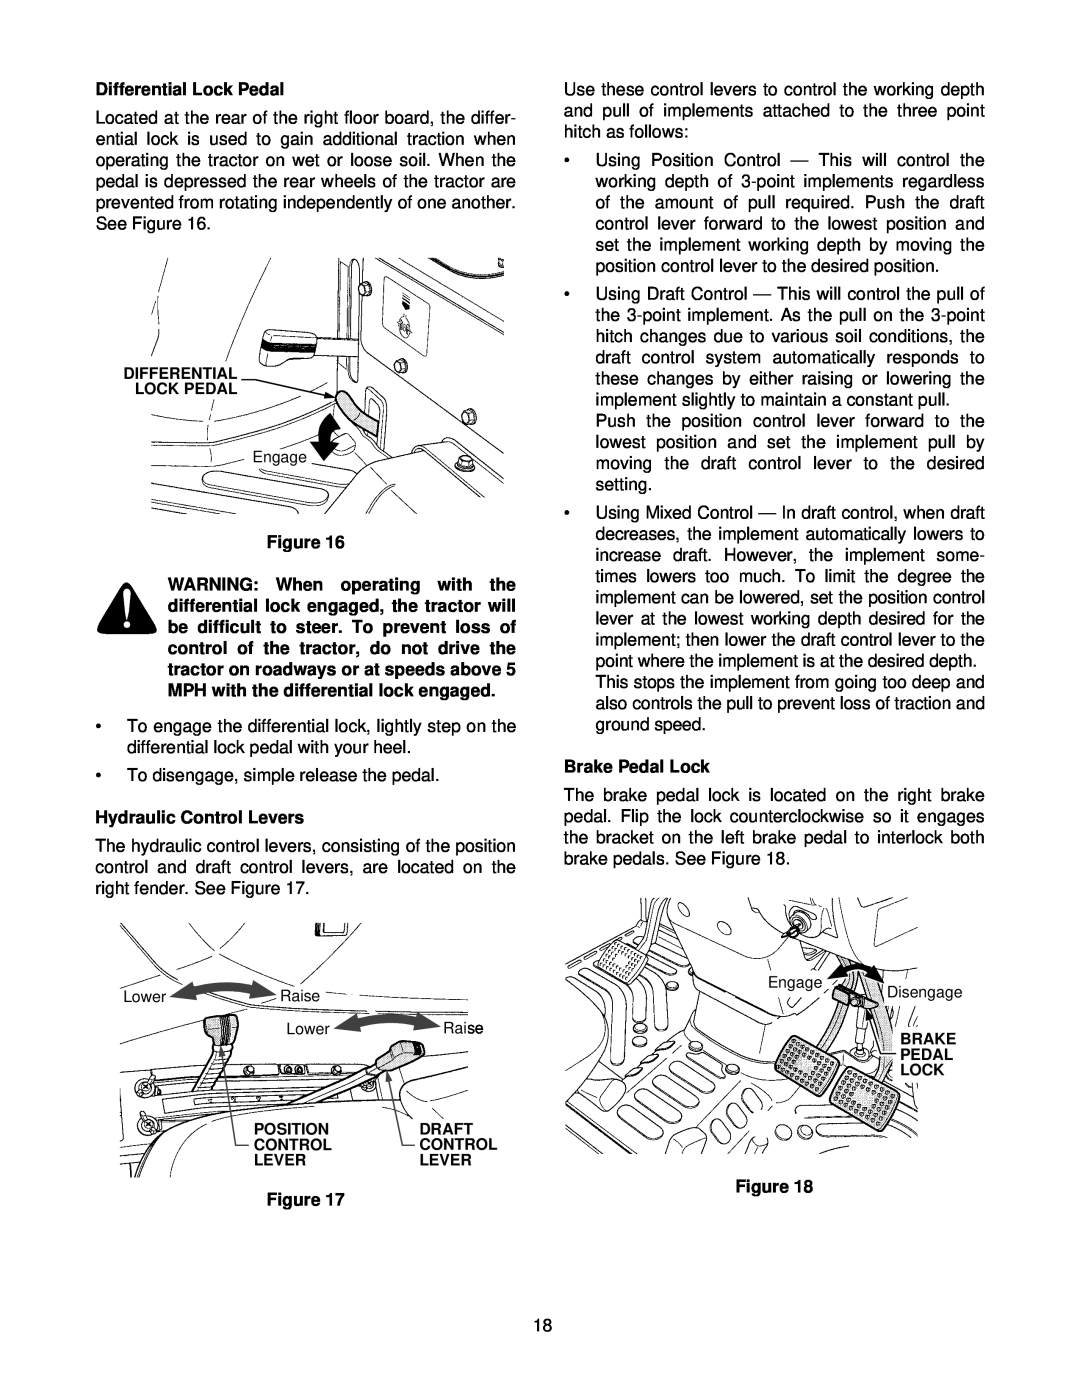 Cub Cadet 8354 manual Differential Lock Pedal, Figure, Hydraulic Control Levers, Brake Pedal Lock 